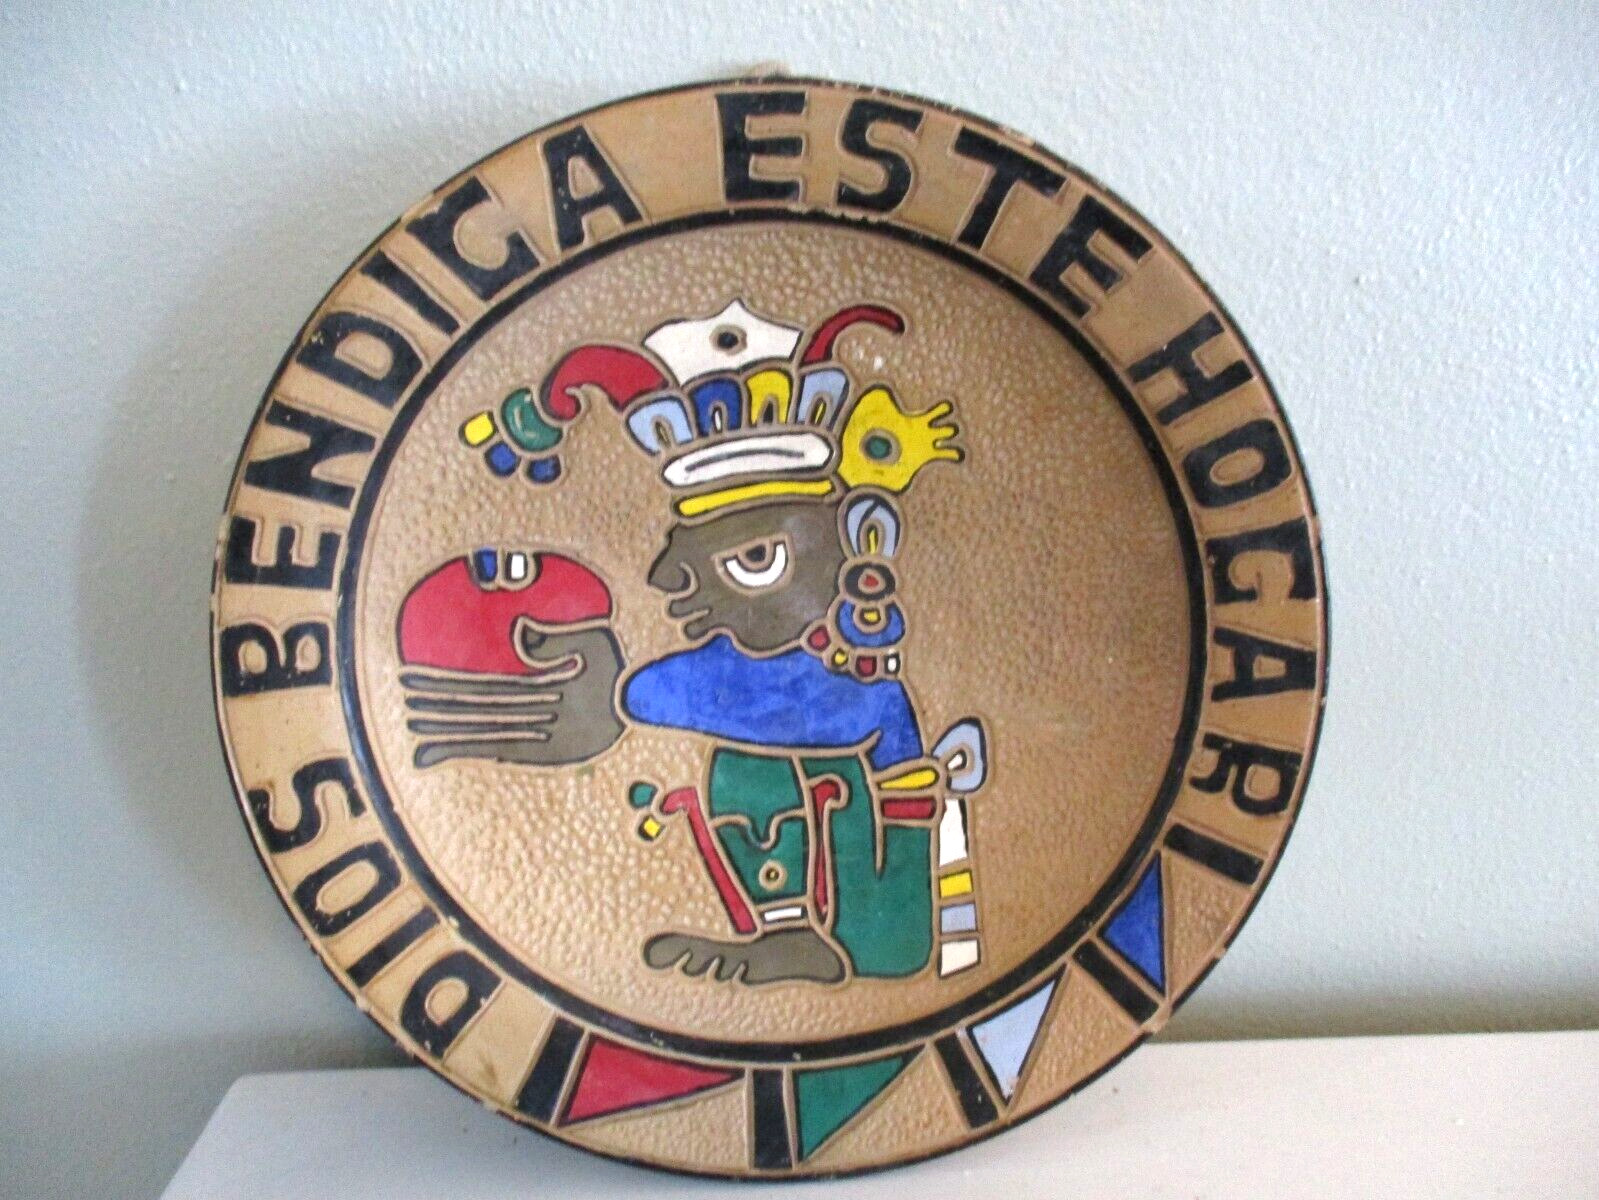 Dios Bendica Este Hogar -Bless This Home hand made Spanish Pottery painted bowl